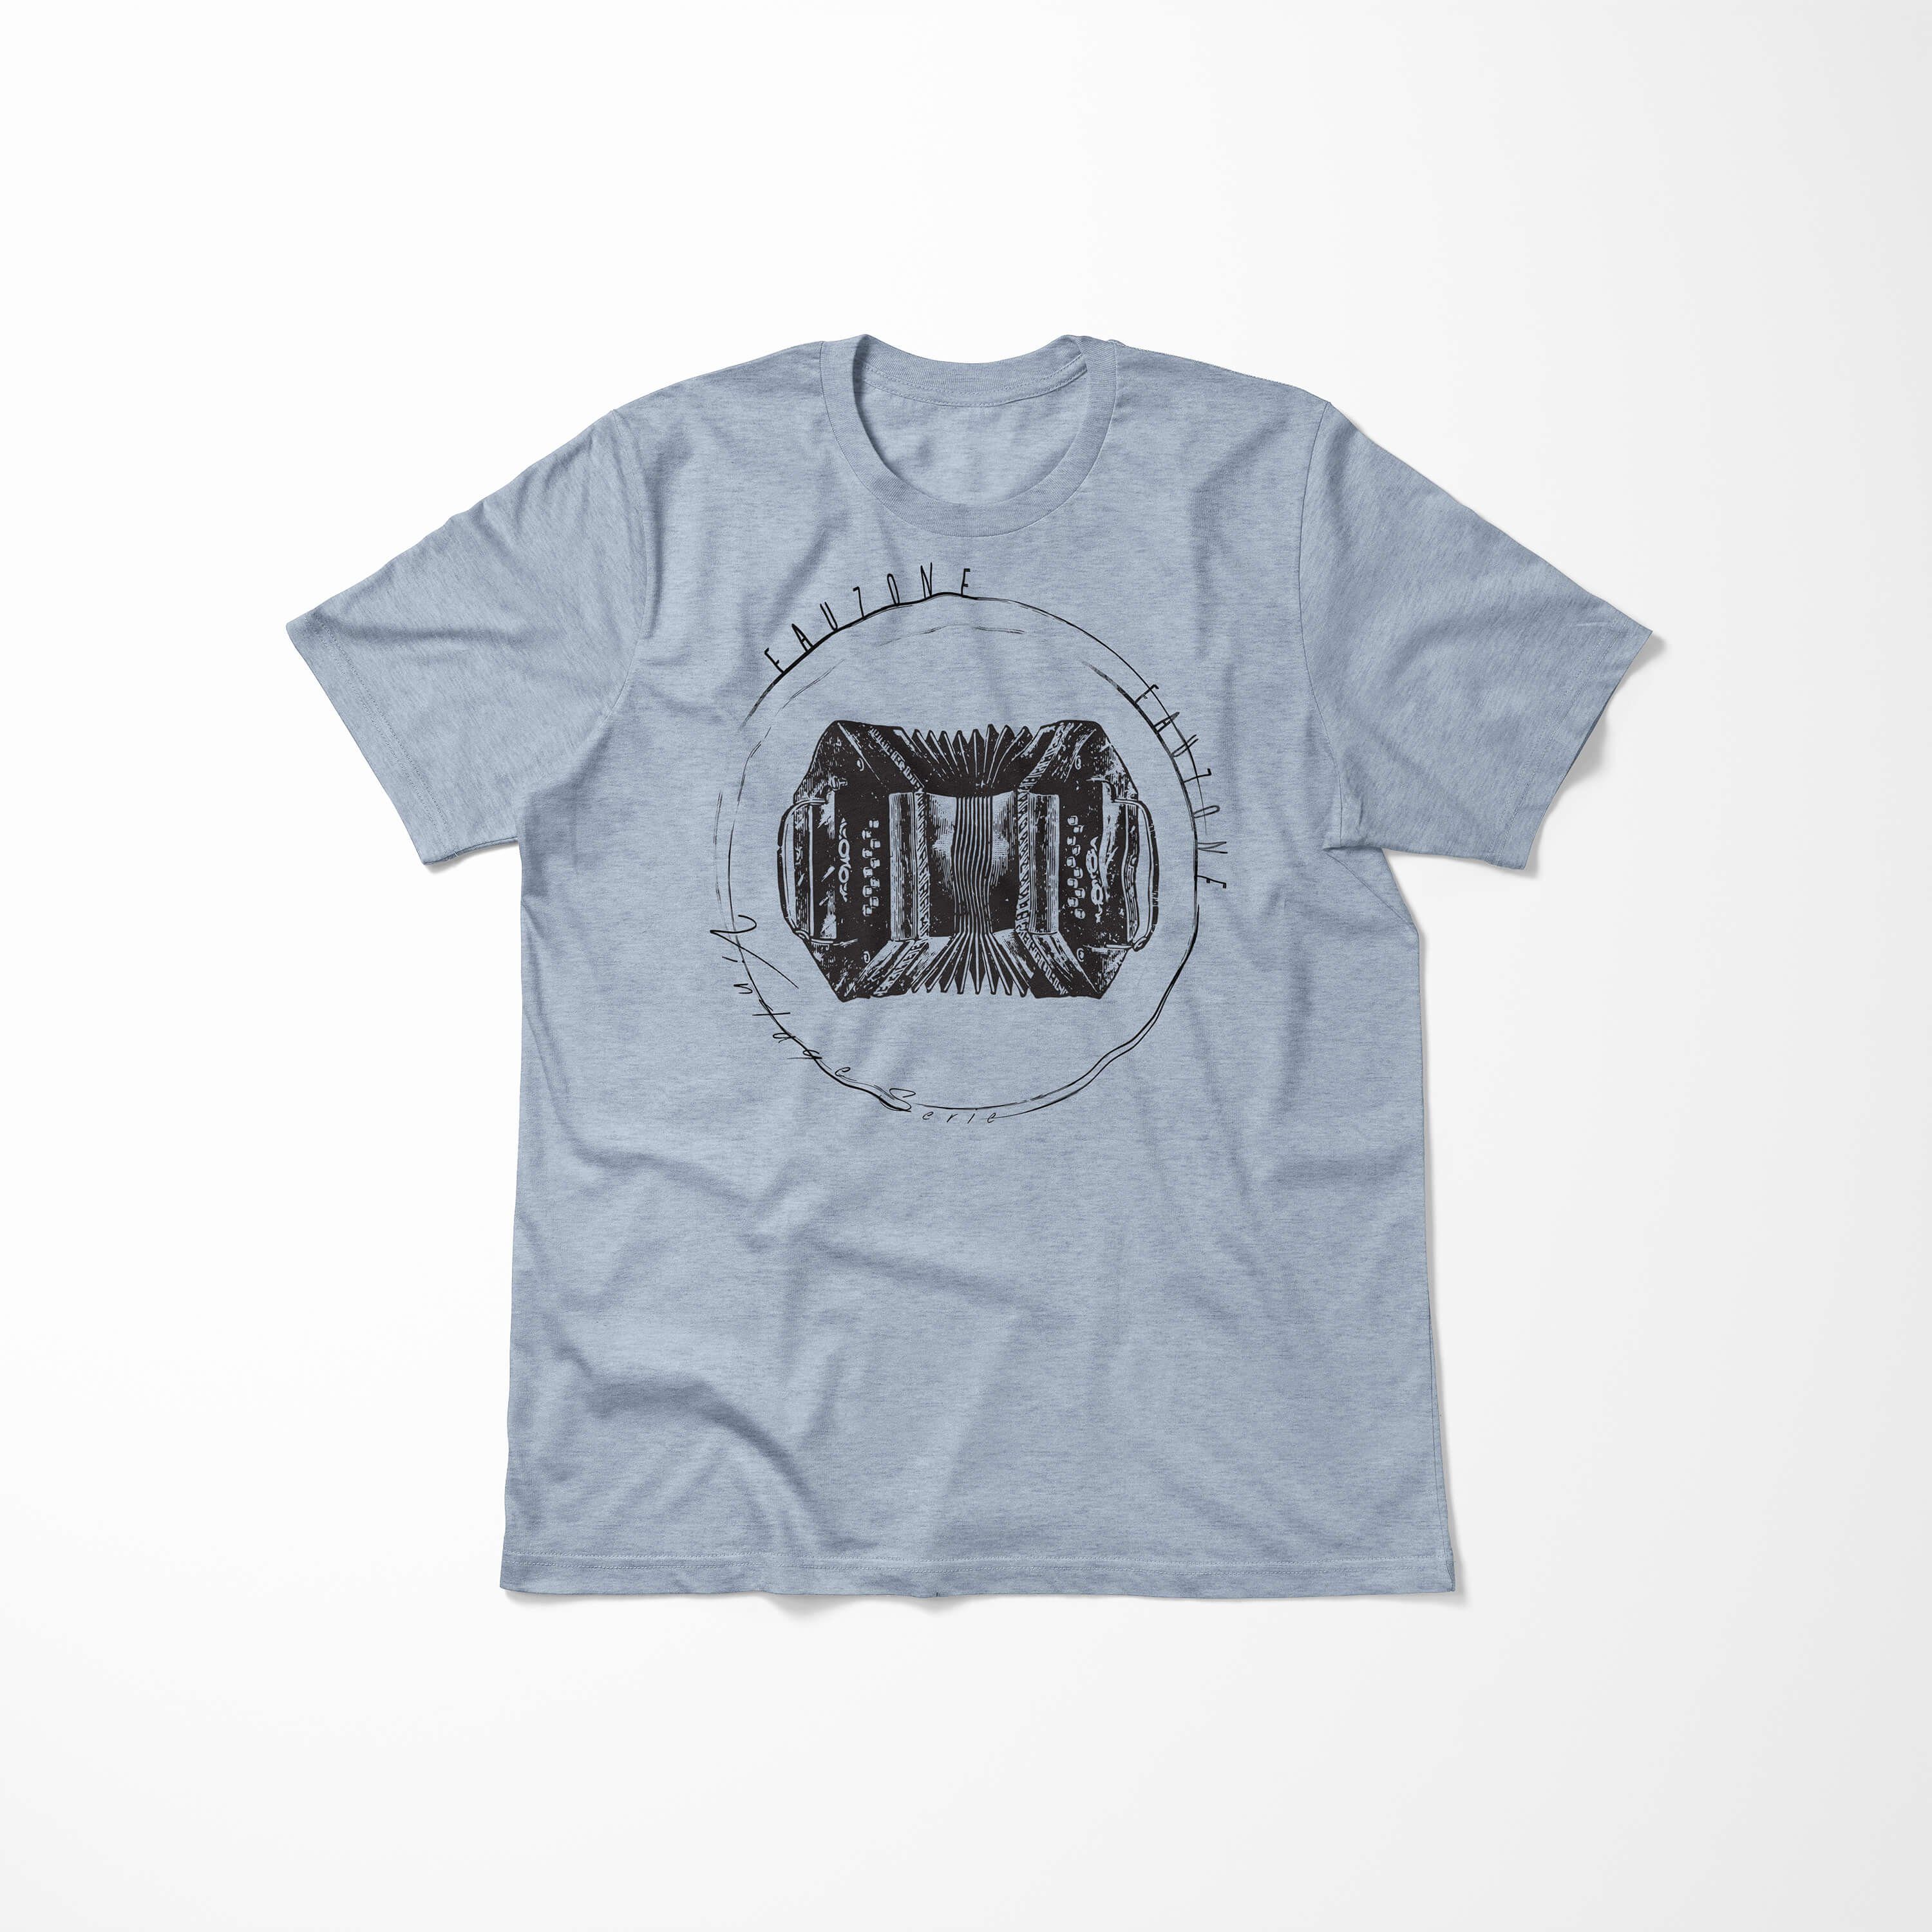 Sinus Art Vintage Ziehharmonika Stonewash Herren T-Shirt T-Shirt Denim